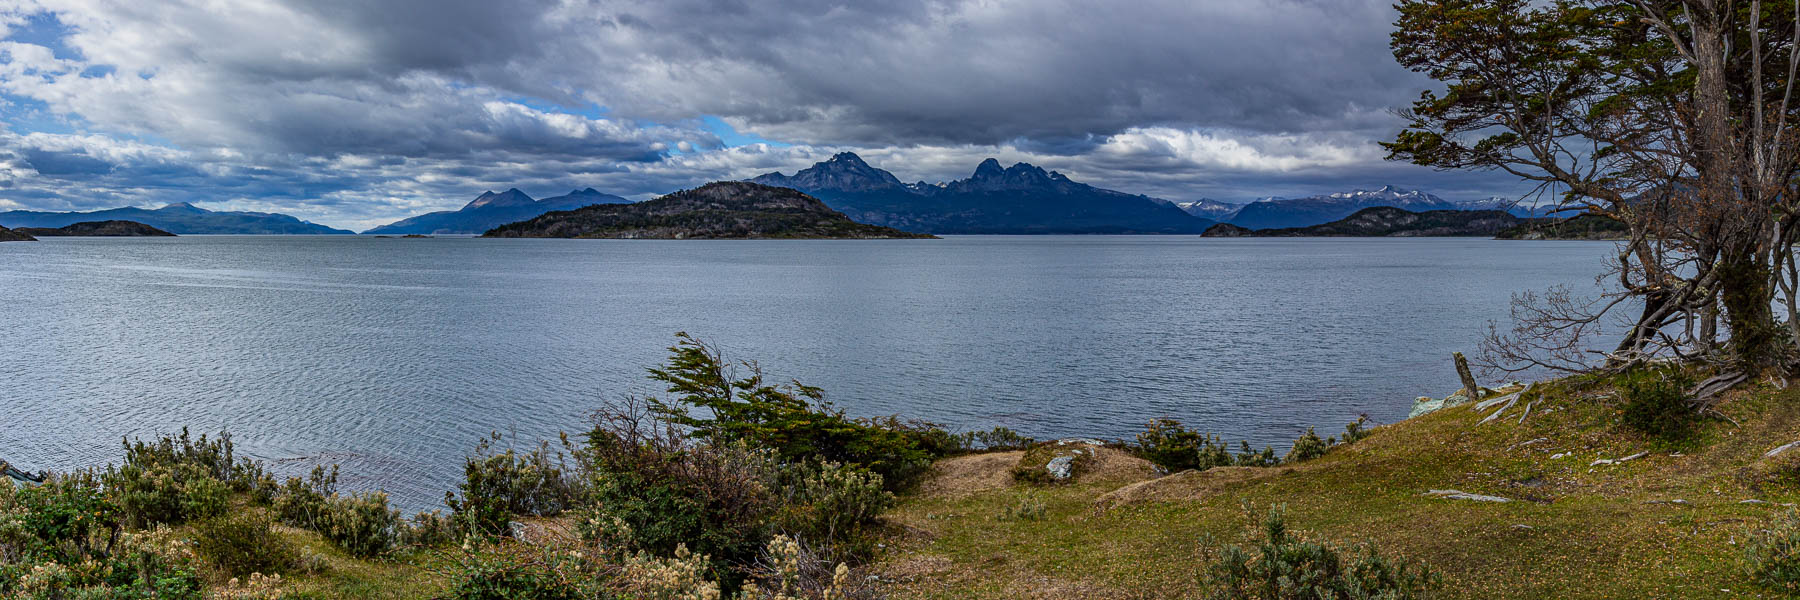 Ushuaia, parc national Tierra del Fuego : baie de Lapataia, canal Beagle